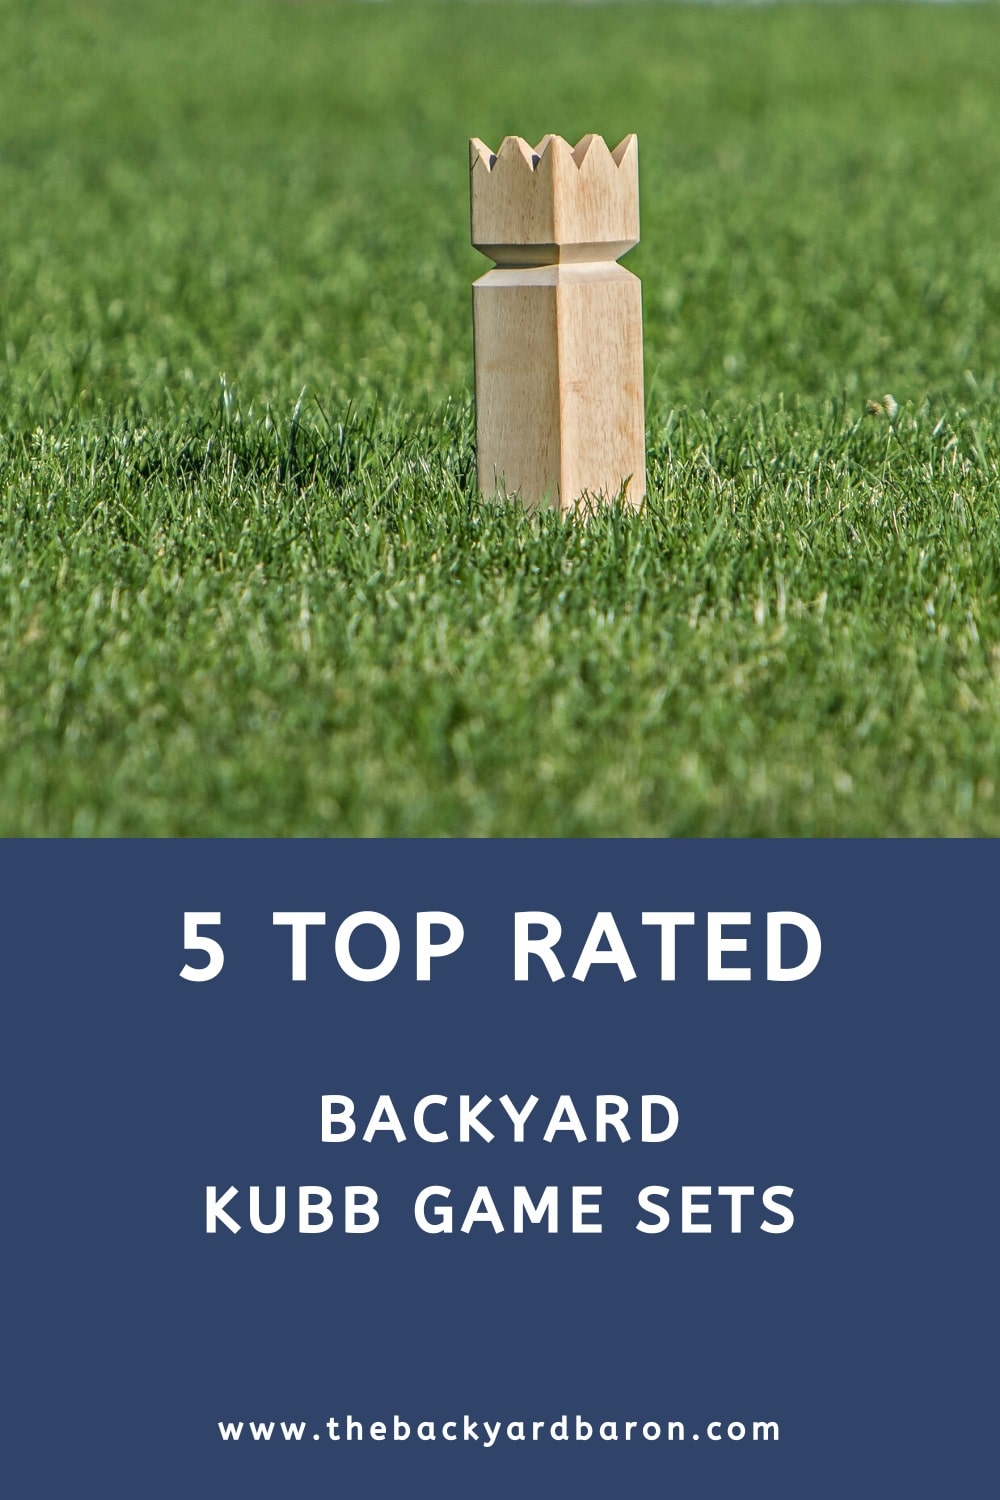 5 Top rated backyard kubb game sets